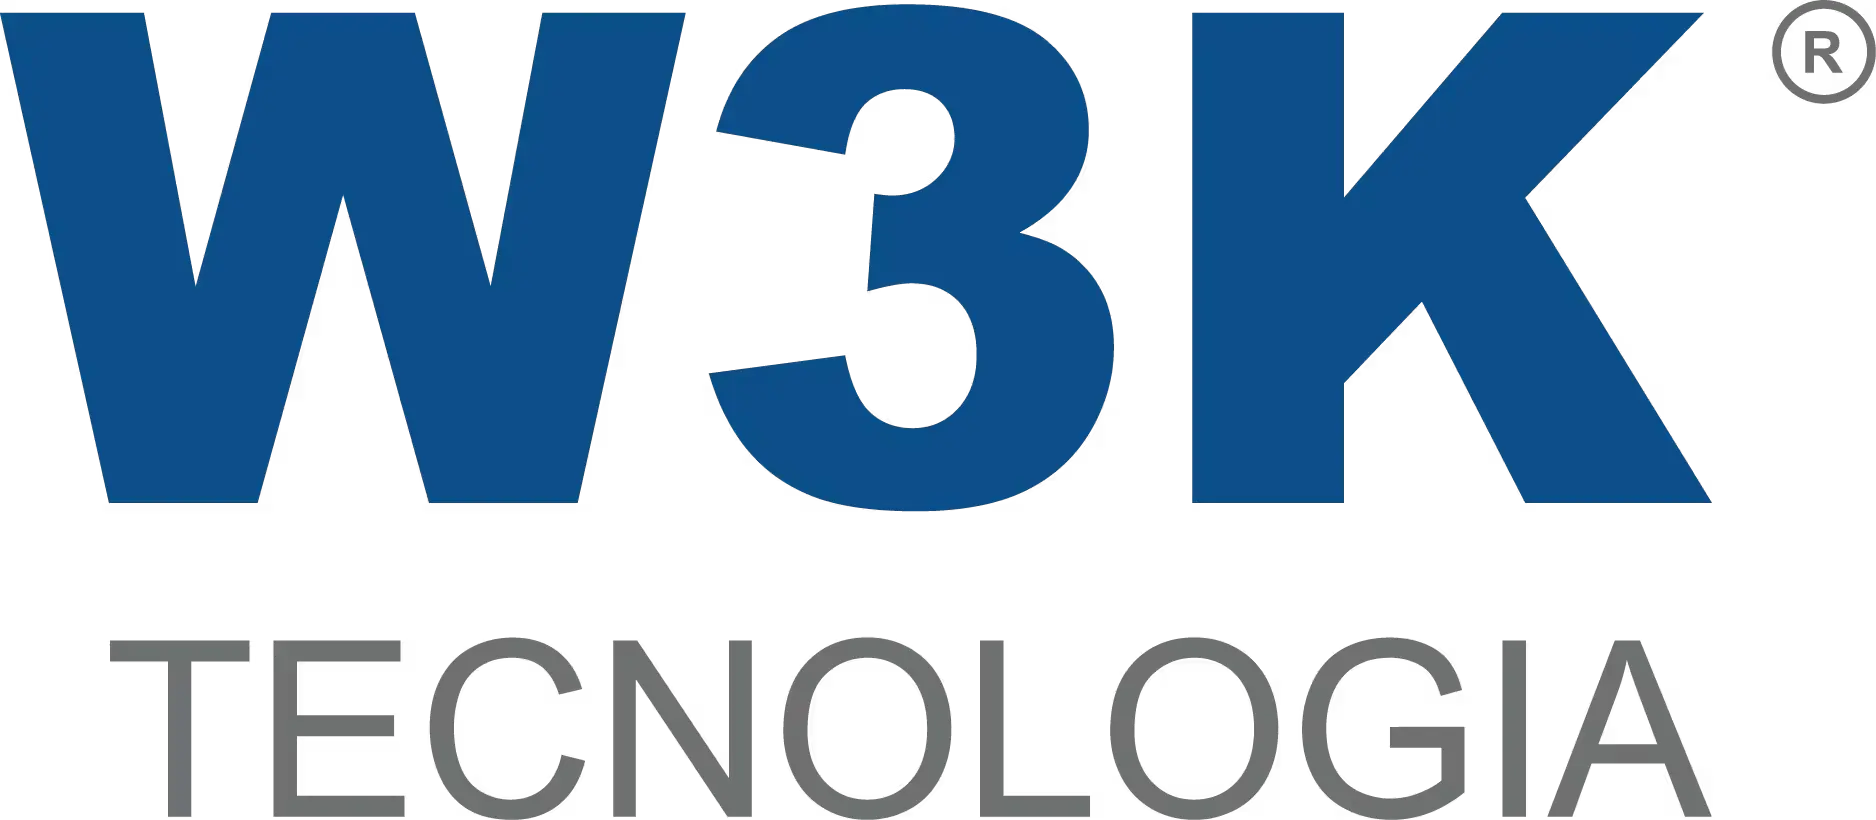 w3k-logo